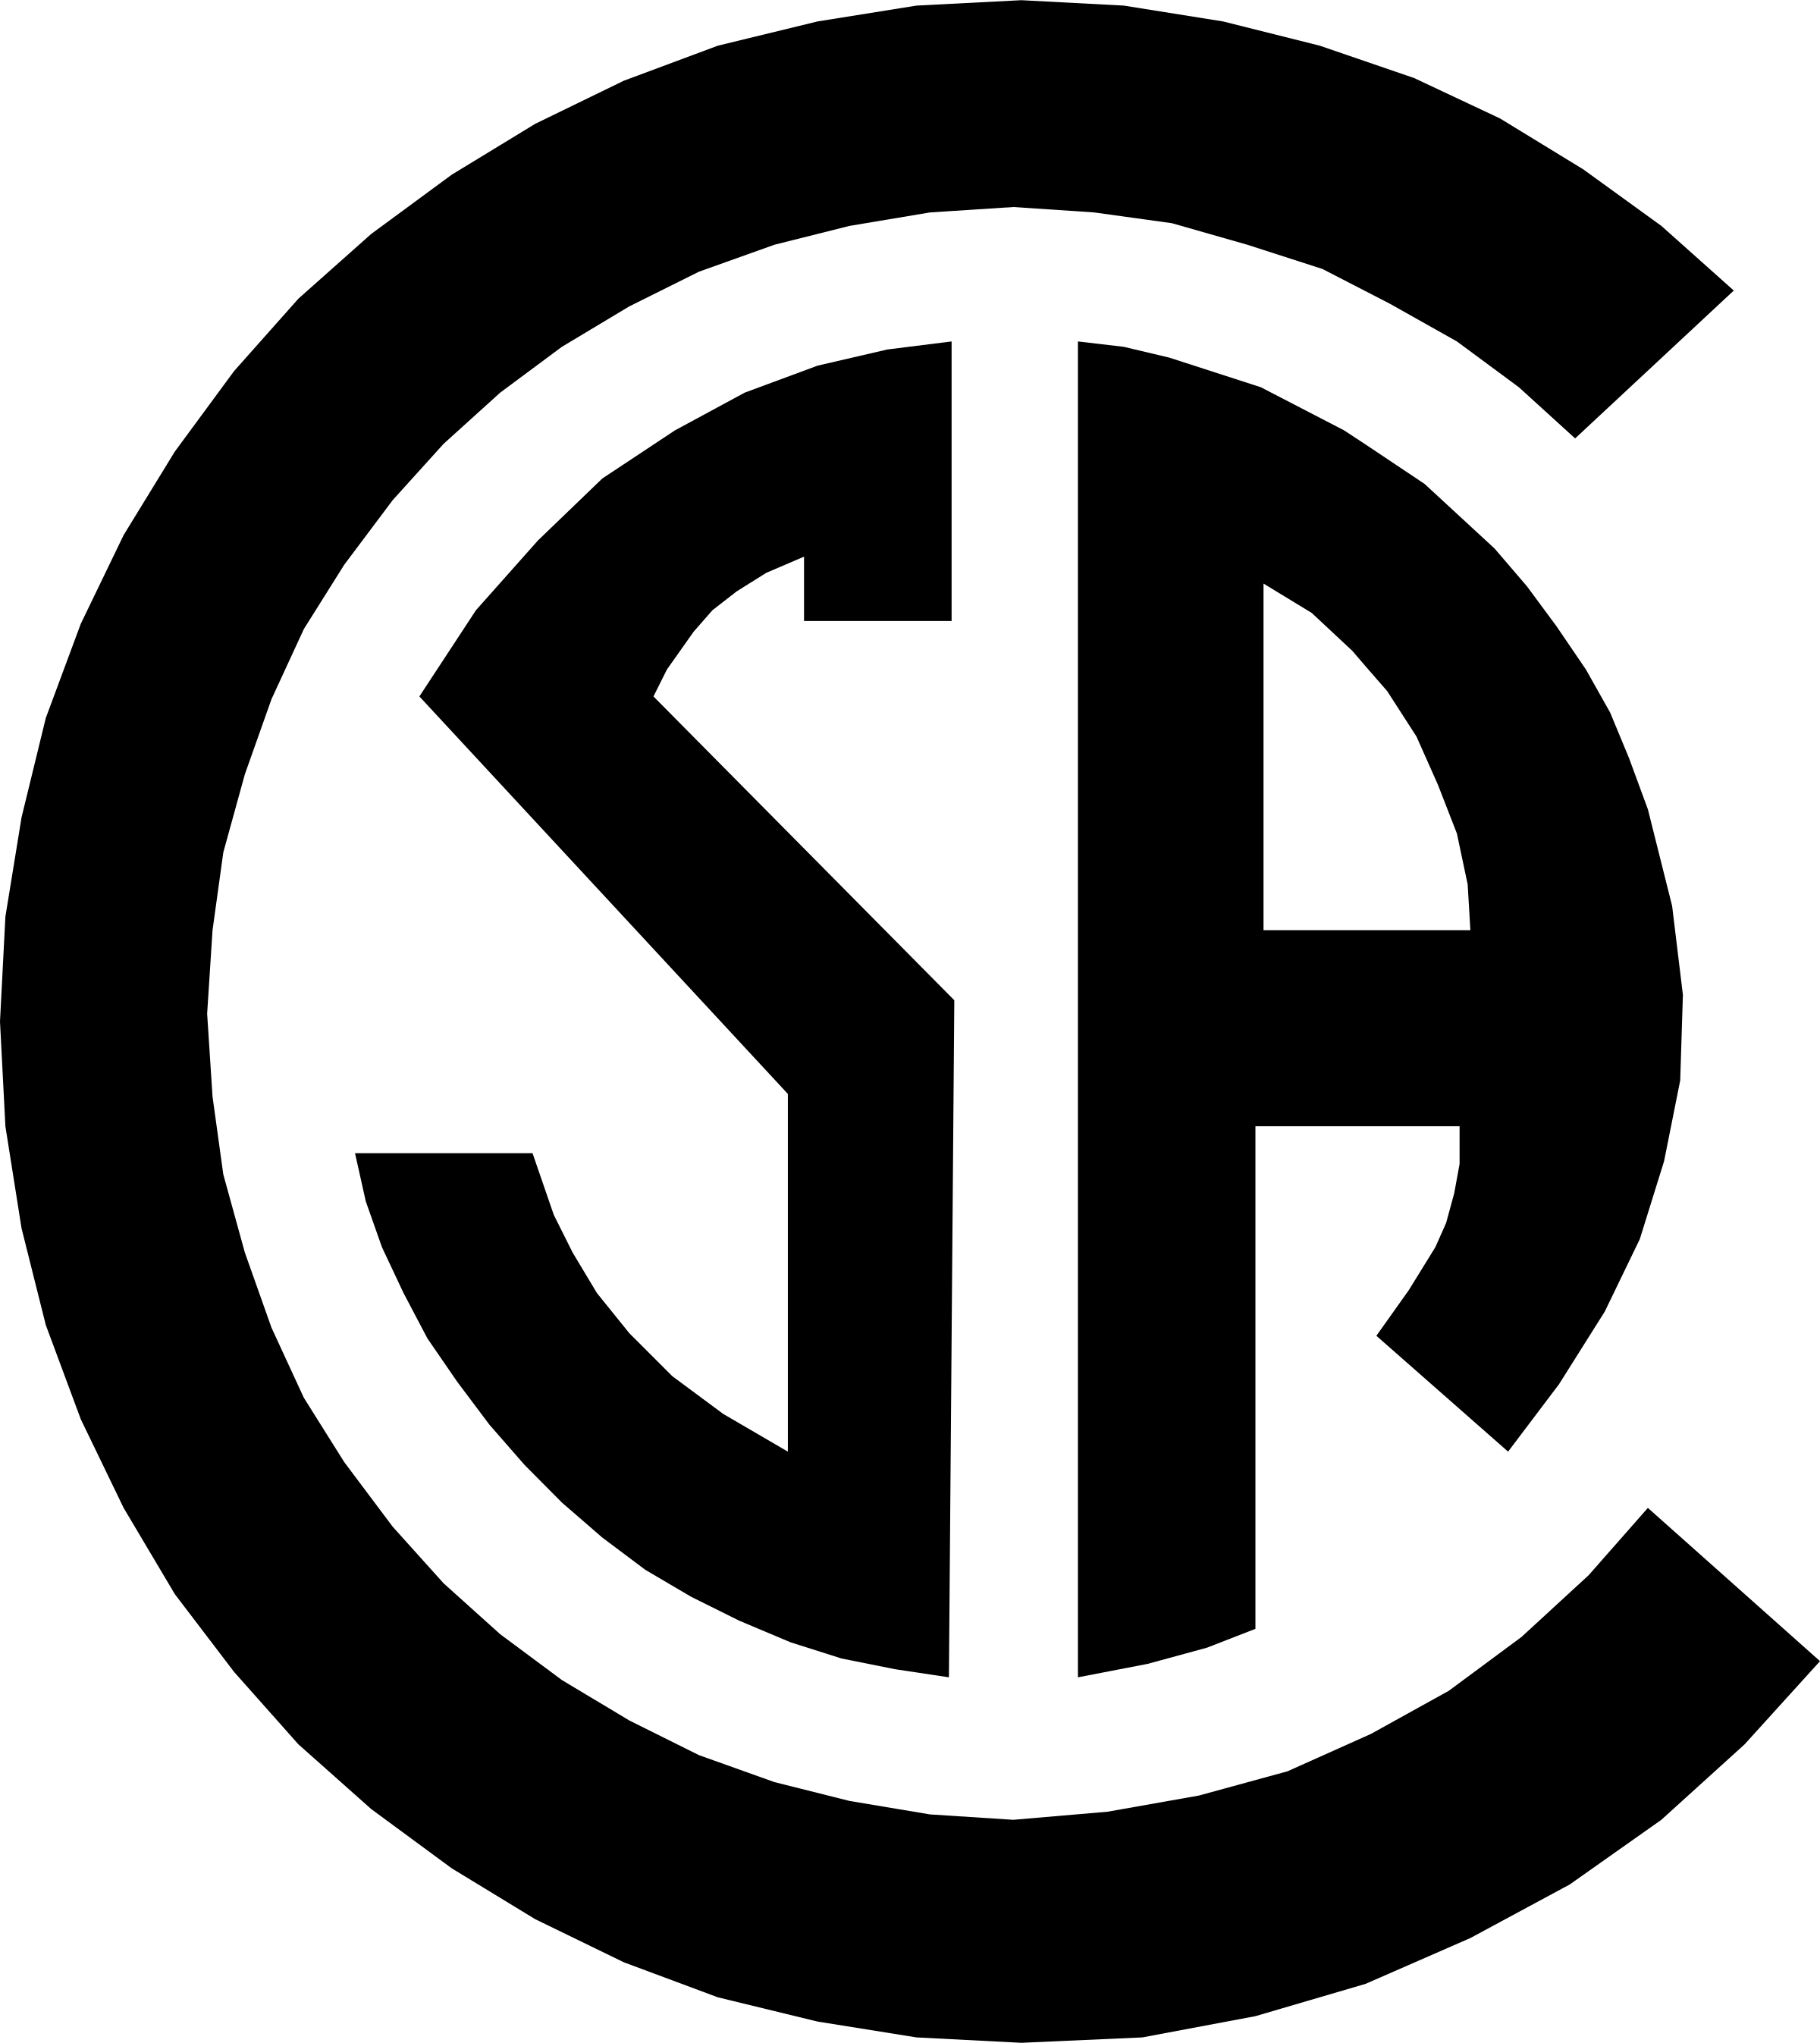 CSA Logo - CSA Logo PNG Transparent & SVG Vector - Freebie Supply